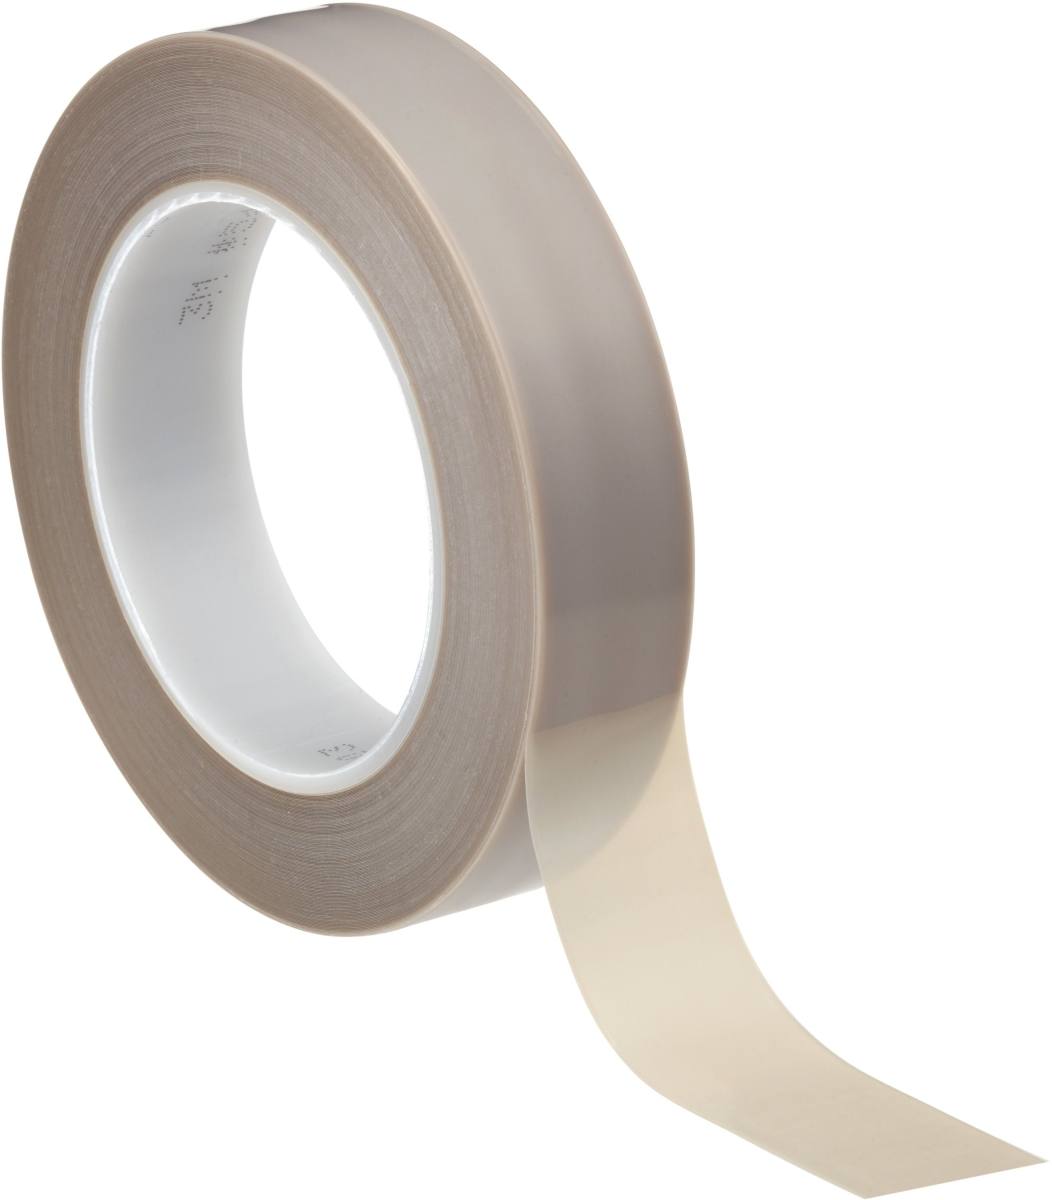 3M 5481 PTFE film adhesive tape 9mmx33m, 0.17mm, silicone